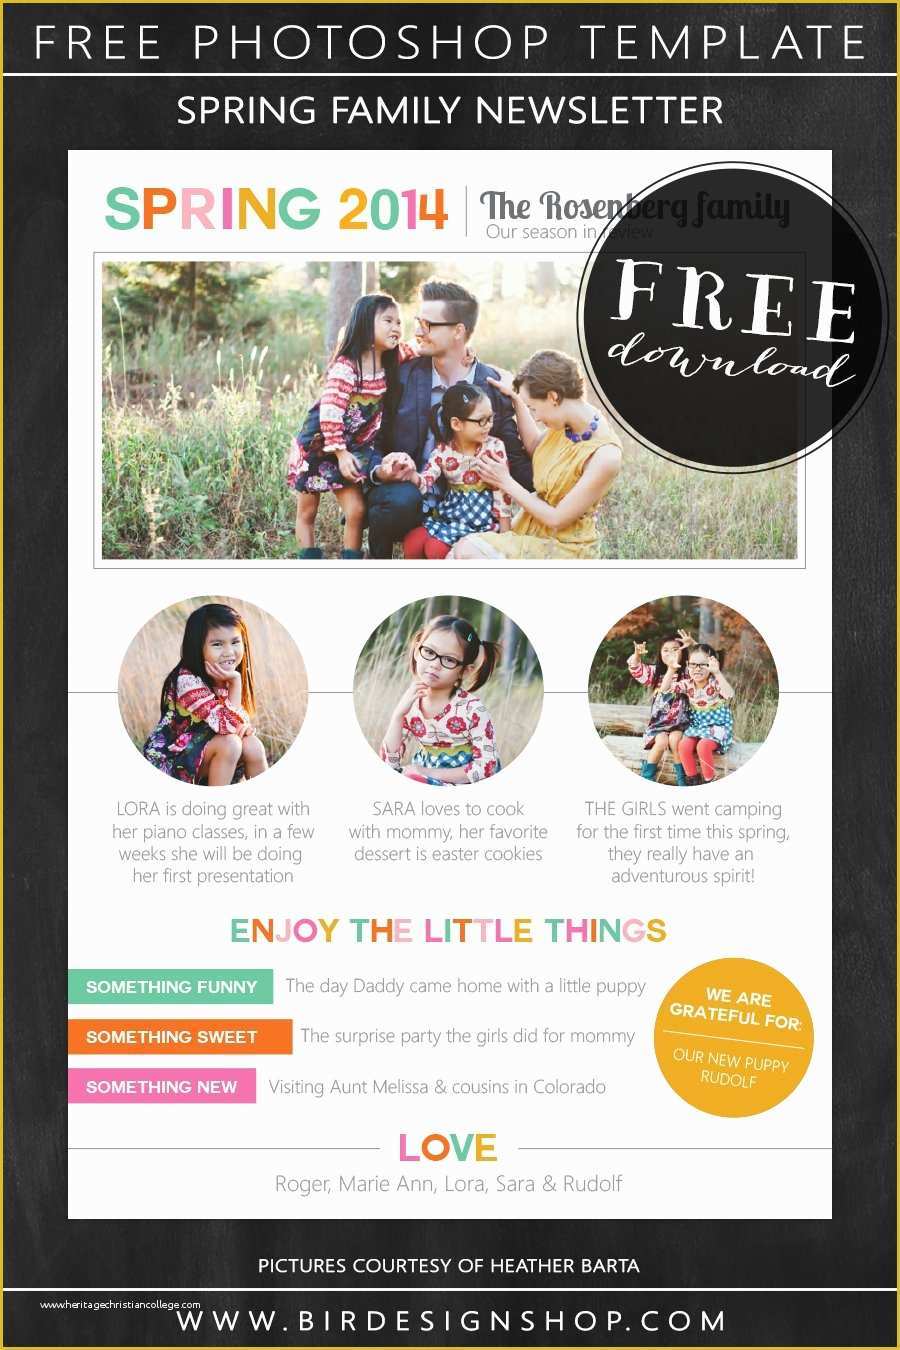 Online Newsletter Templates Free Of Spring Family Newsletter Free Photoshop Template – Birdesign